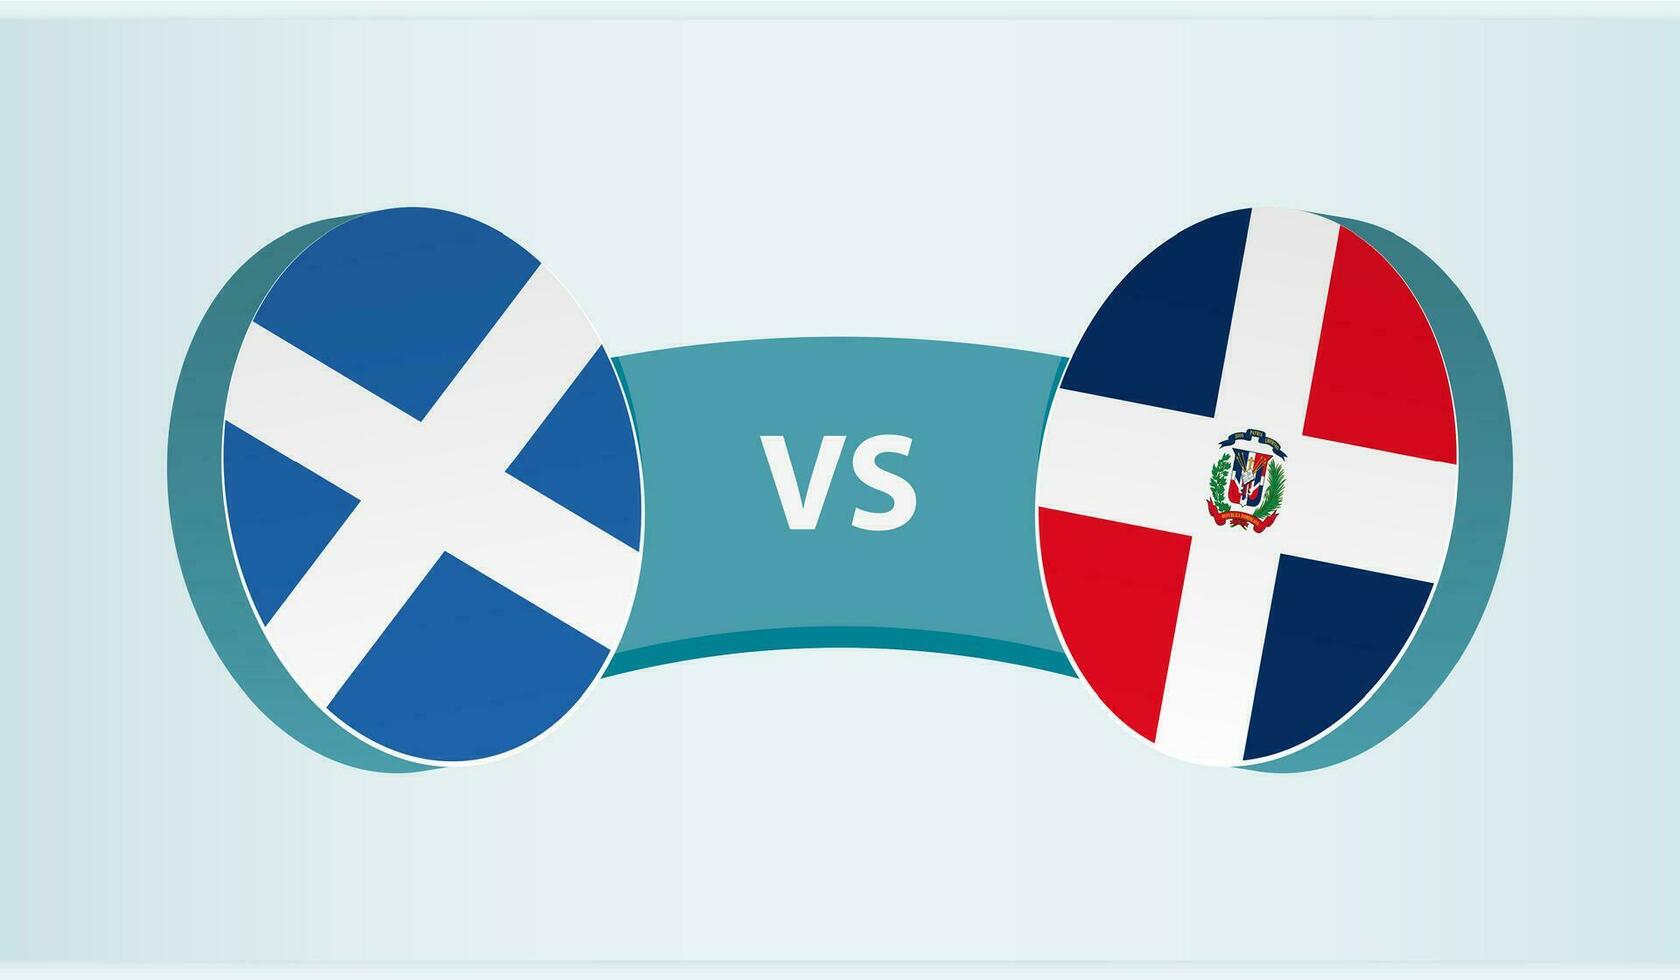 Scotland versus Dominican Republic, team sports competition concept. vector